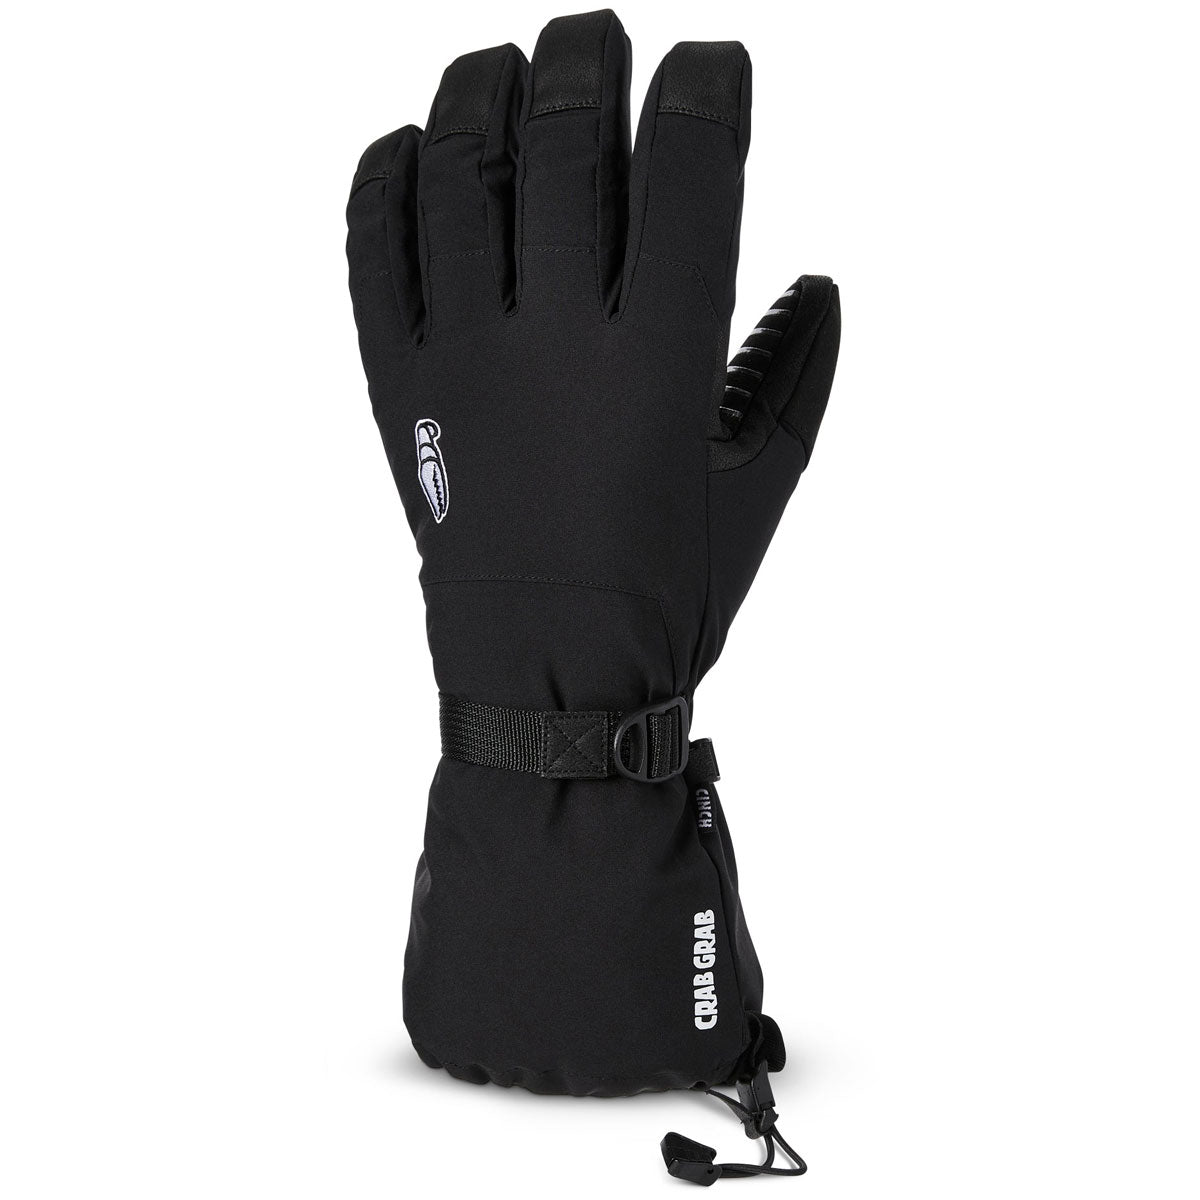 Crab Grab Cinch Snowboard Gloves - Black image 1